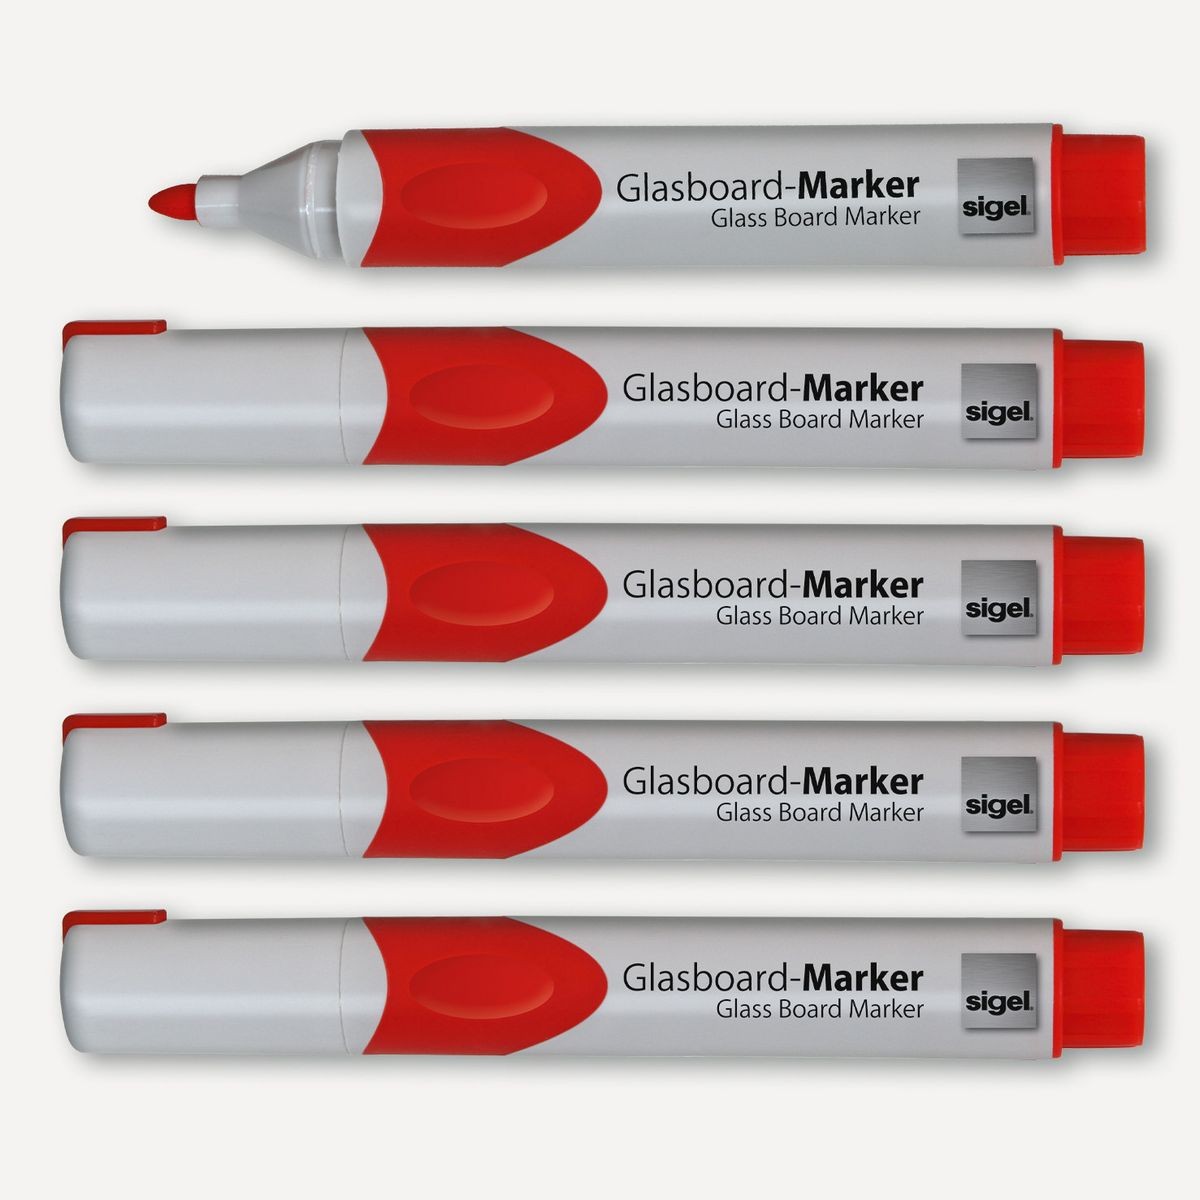 GL713 - Sigel - Glass Board Markers, 2-3 mm round nib - Red